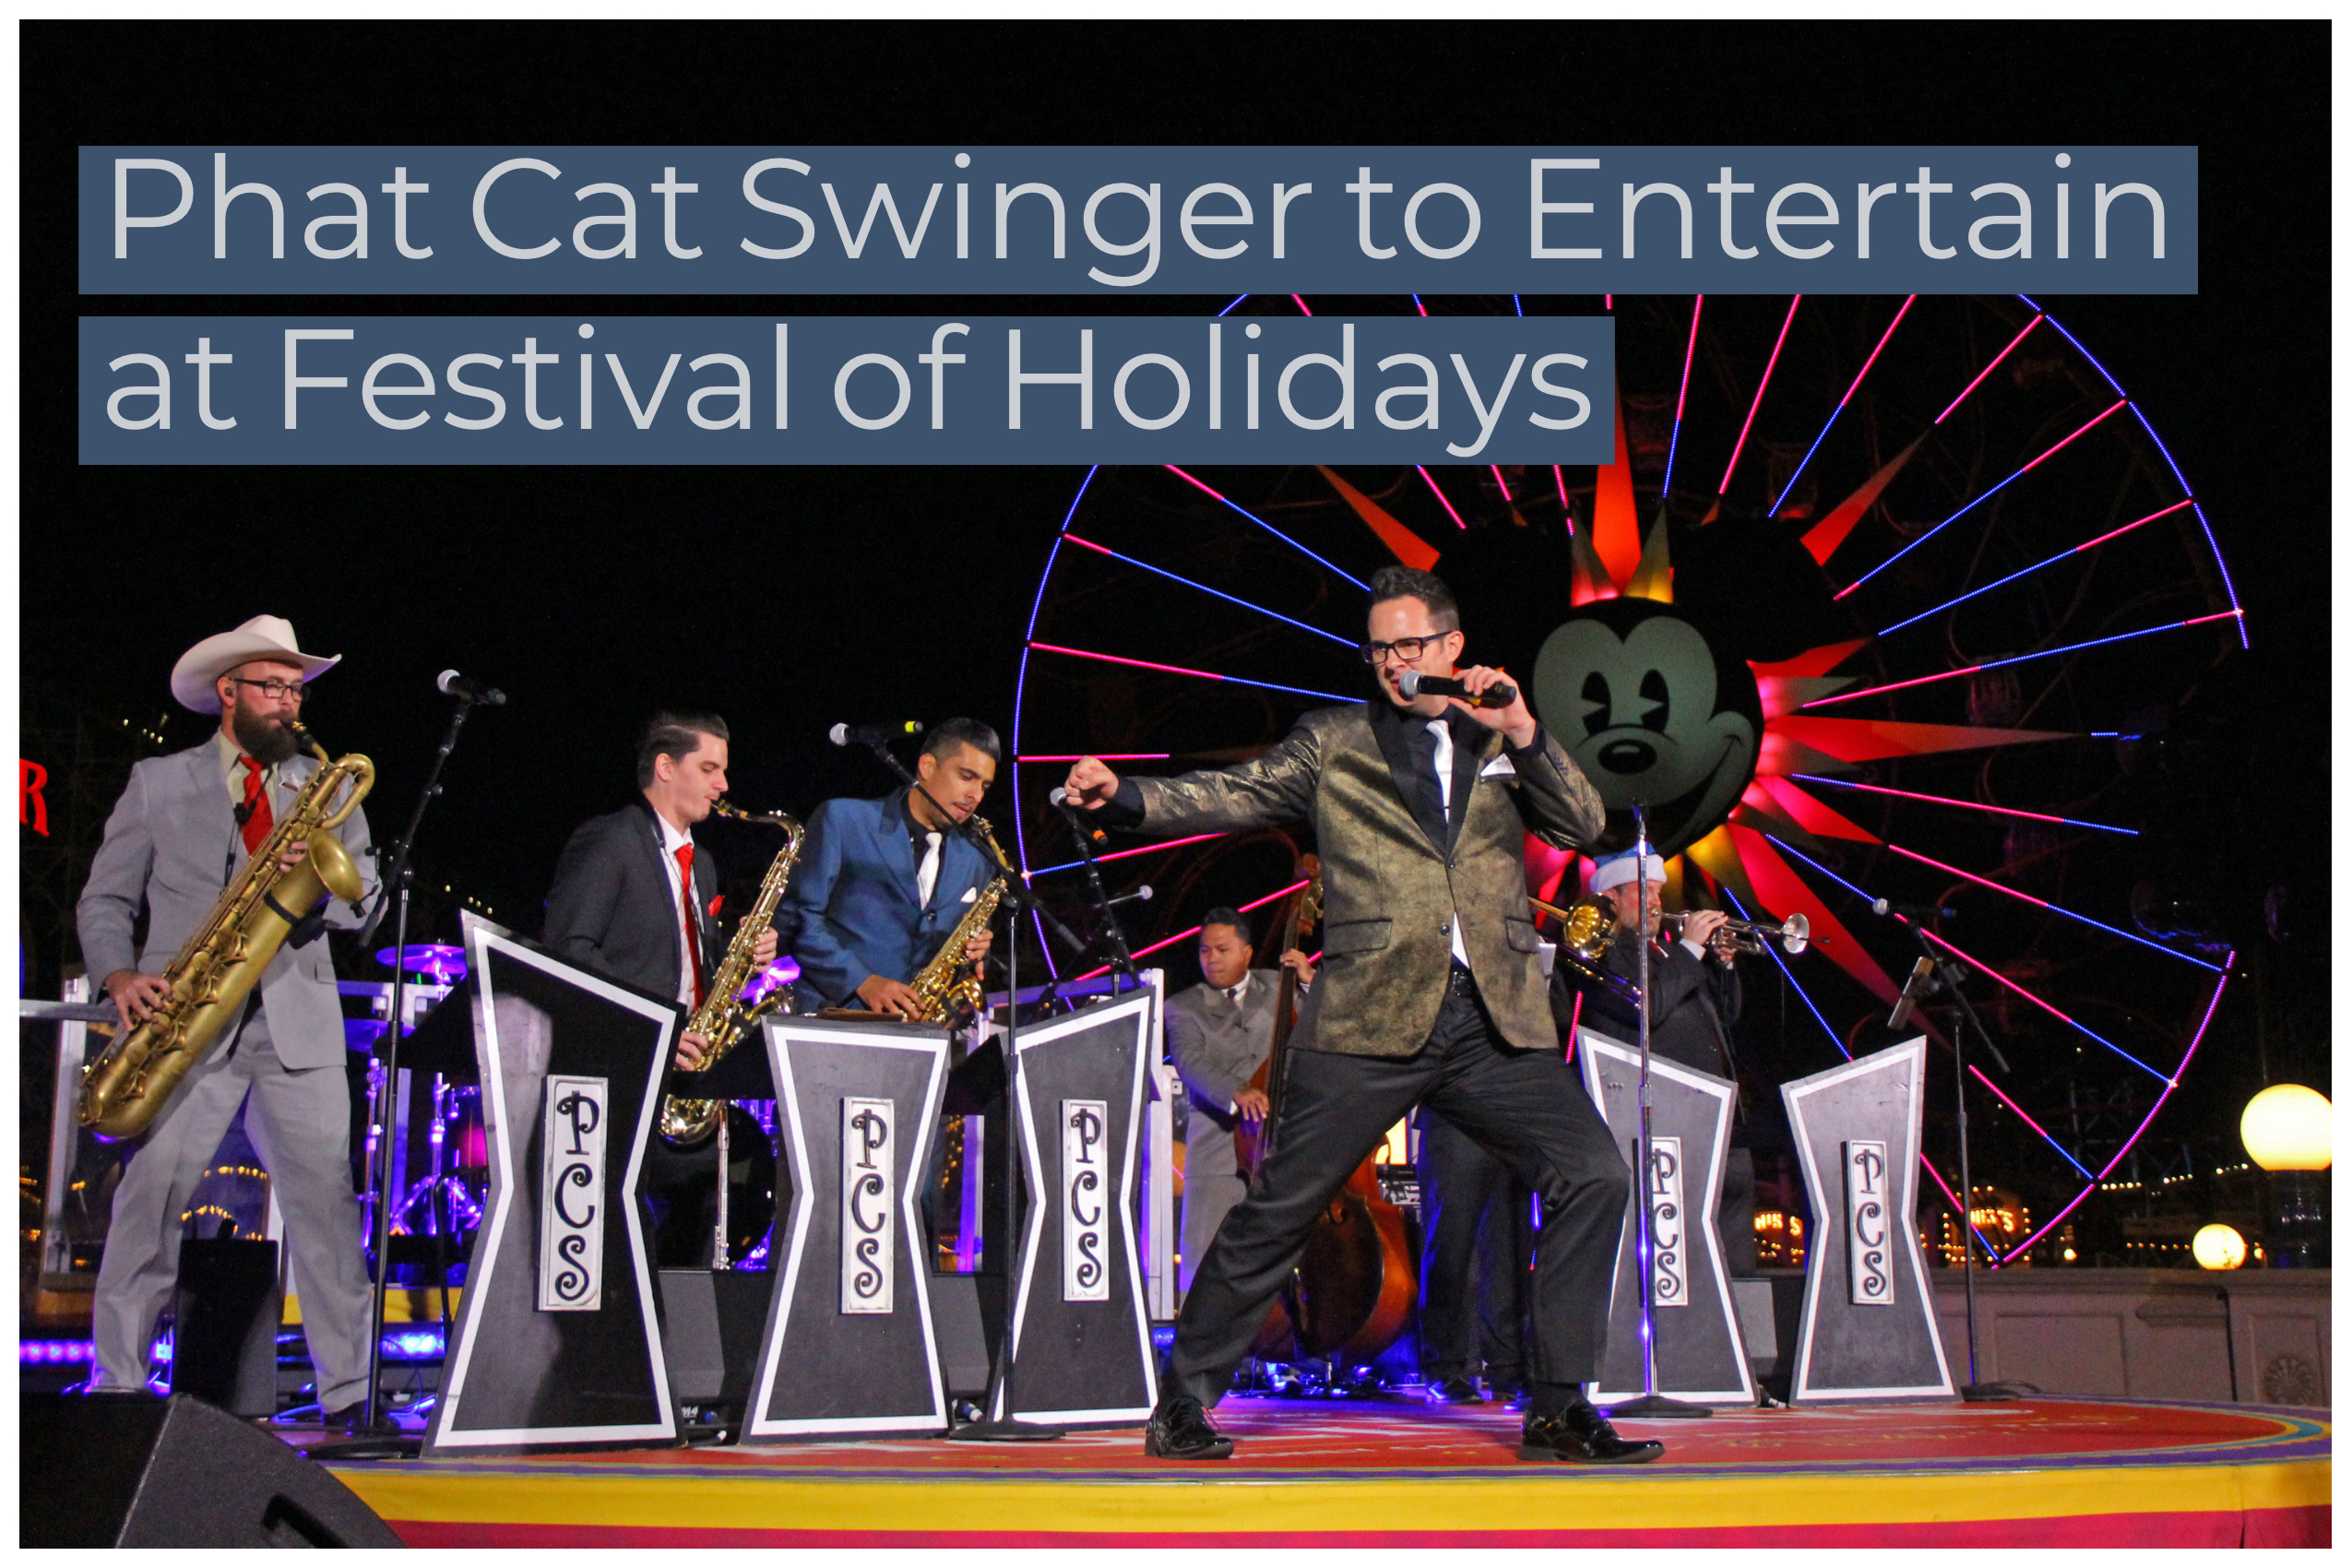 Phat Cat Swinger to Entertain at Festival of Holidays Again at Disney California Adventure